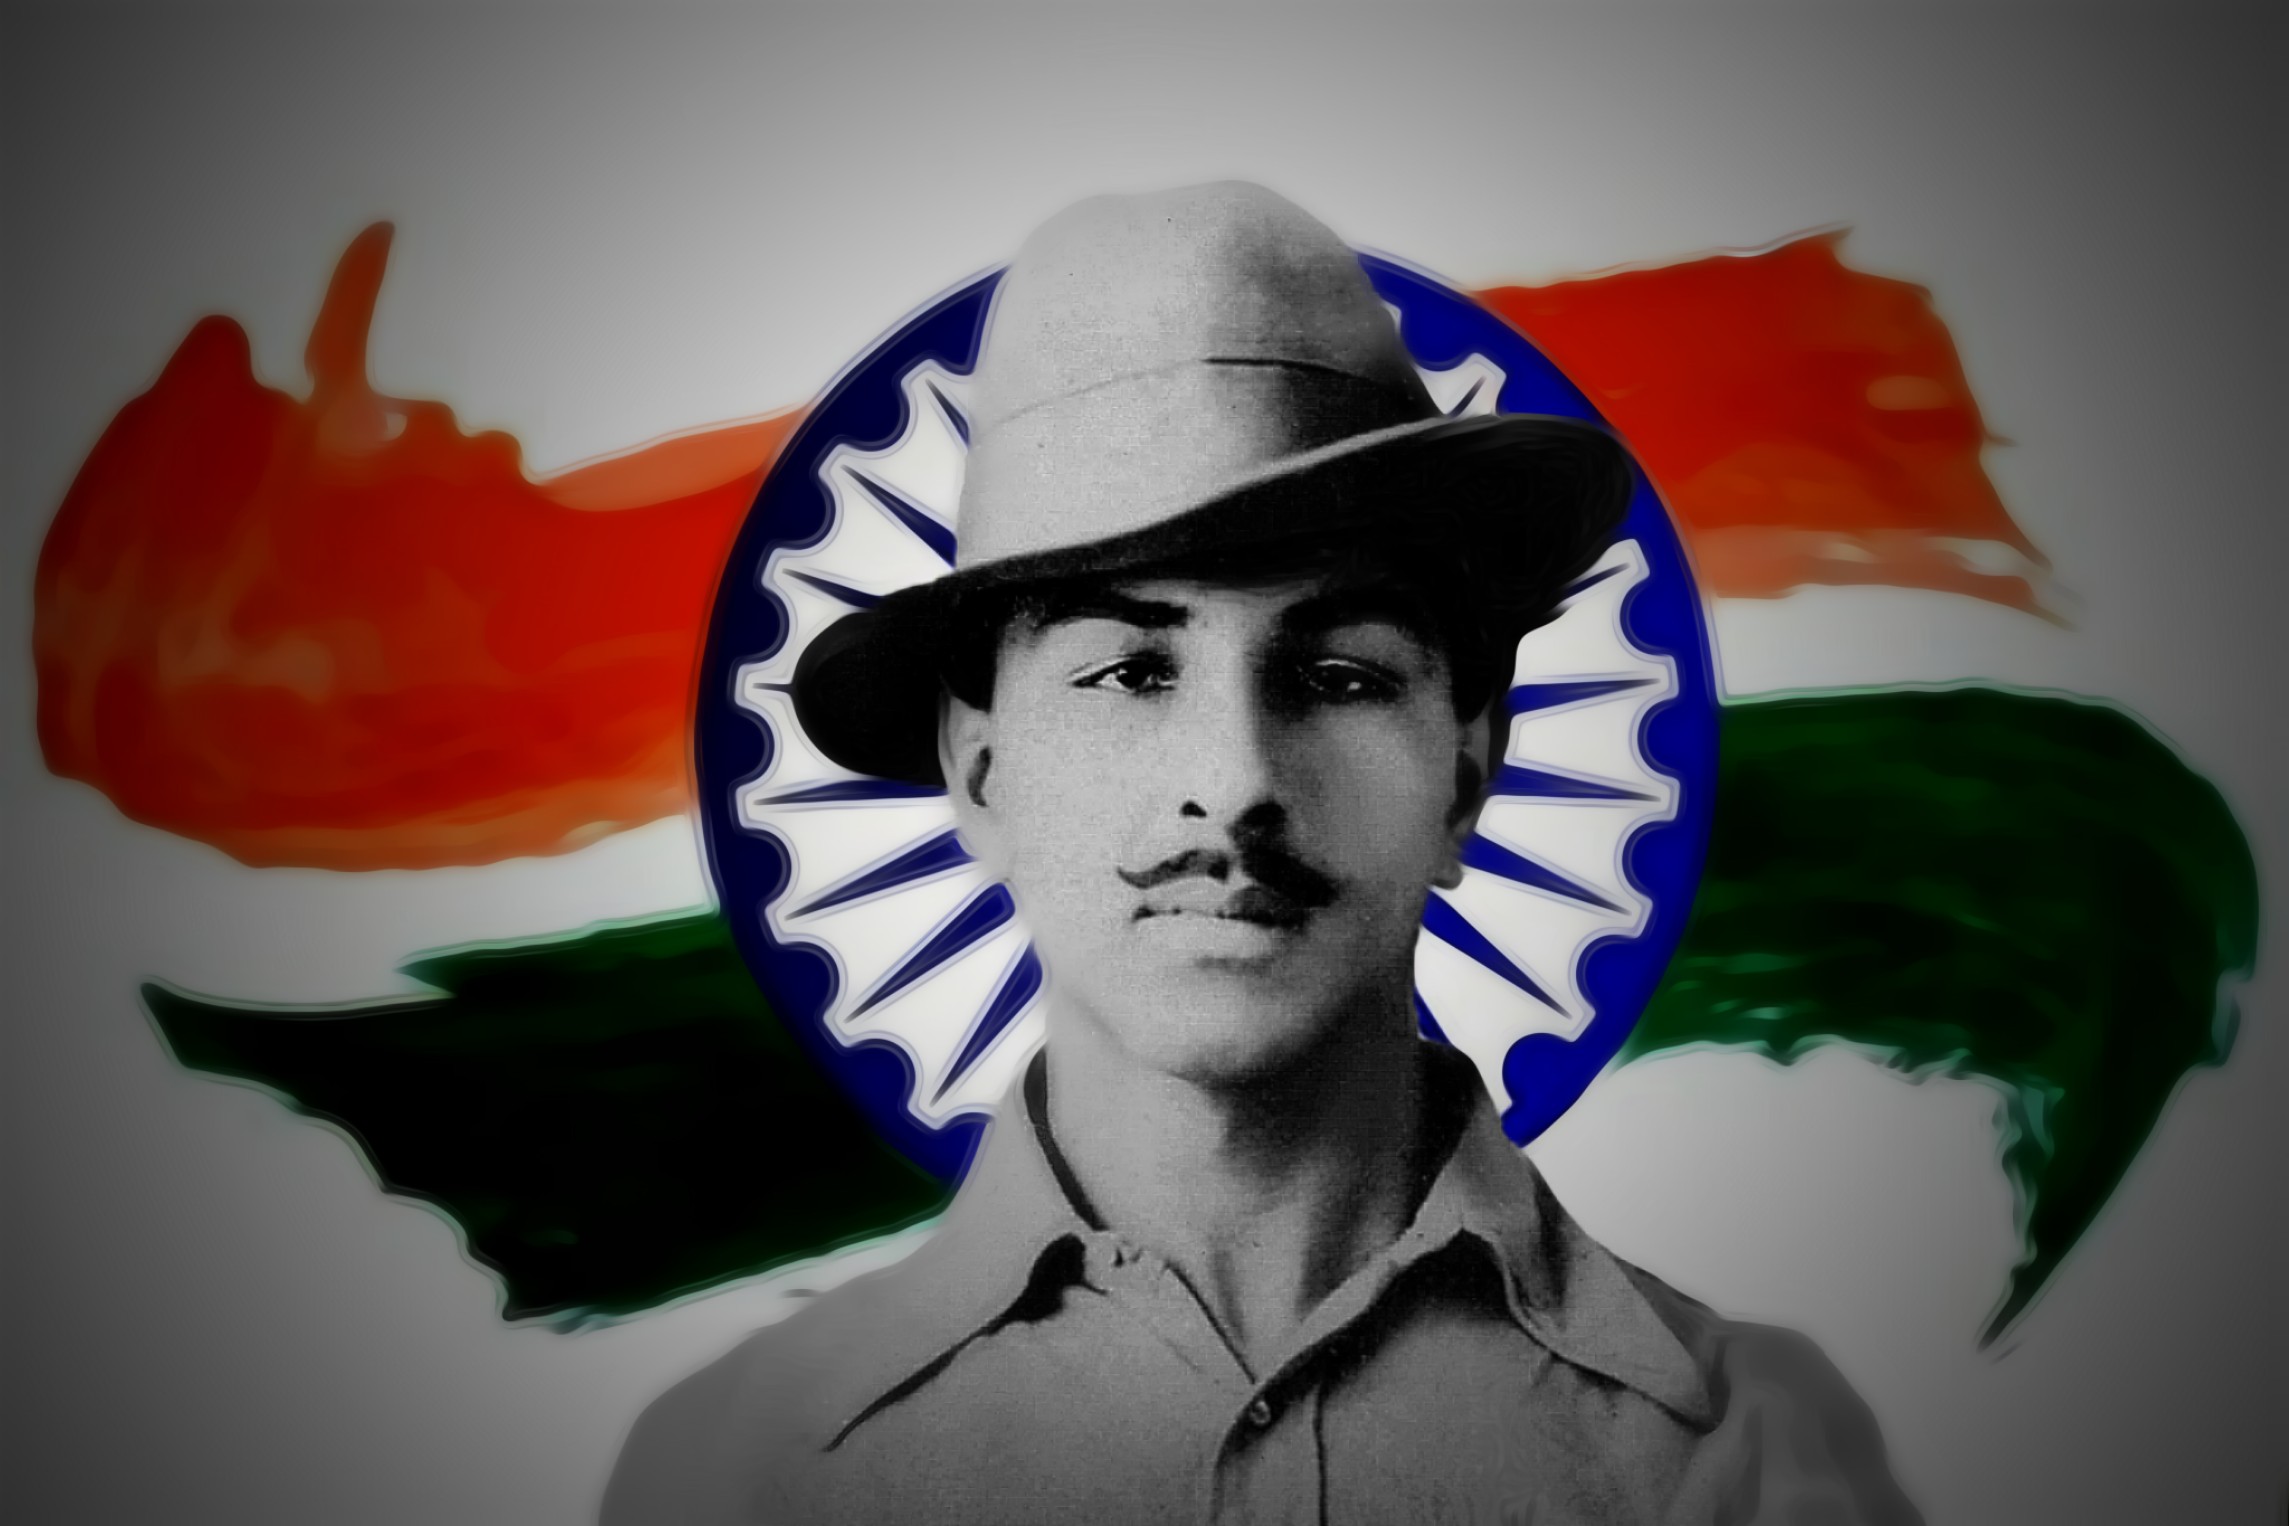 भगत सिंग यांचे जीवनचरित्र - Bhagat Singh Biography in Marathi